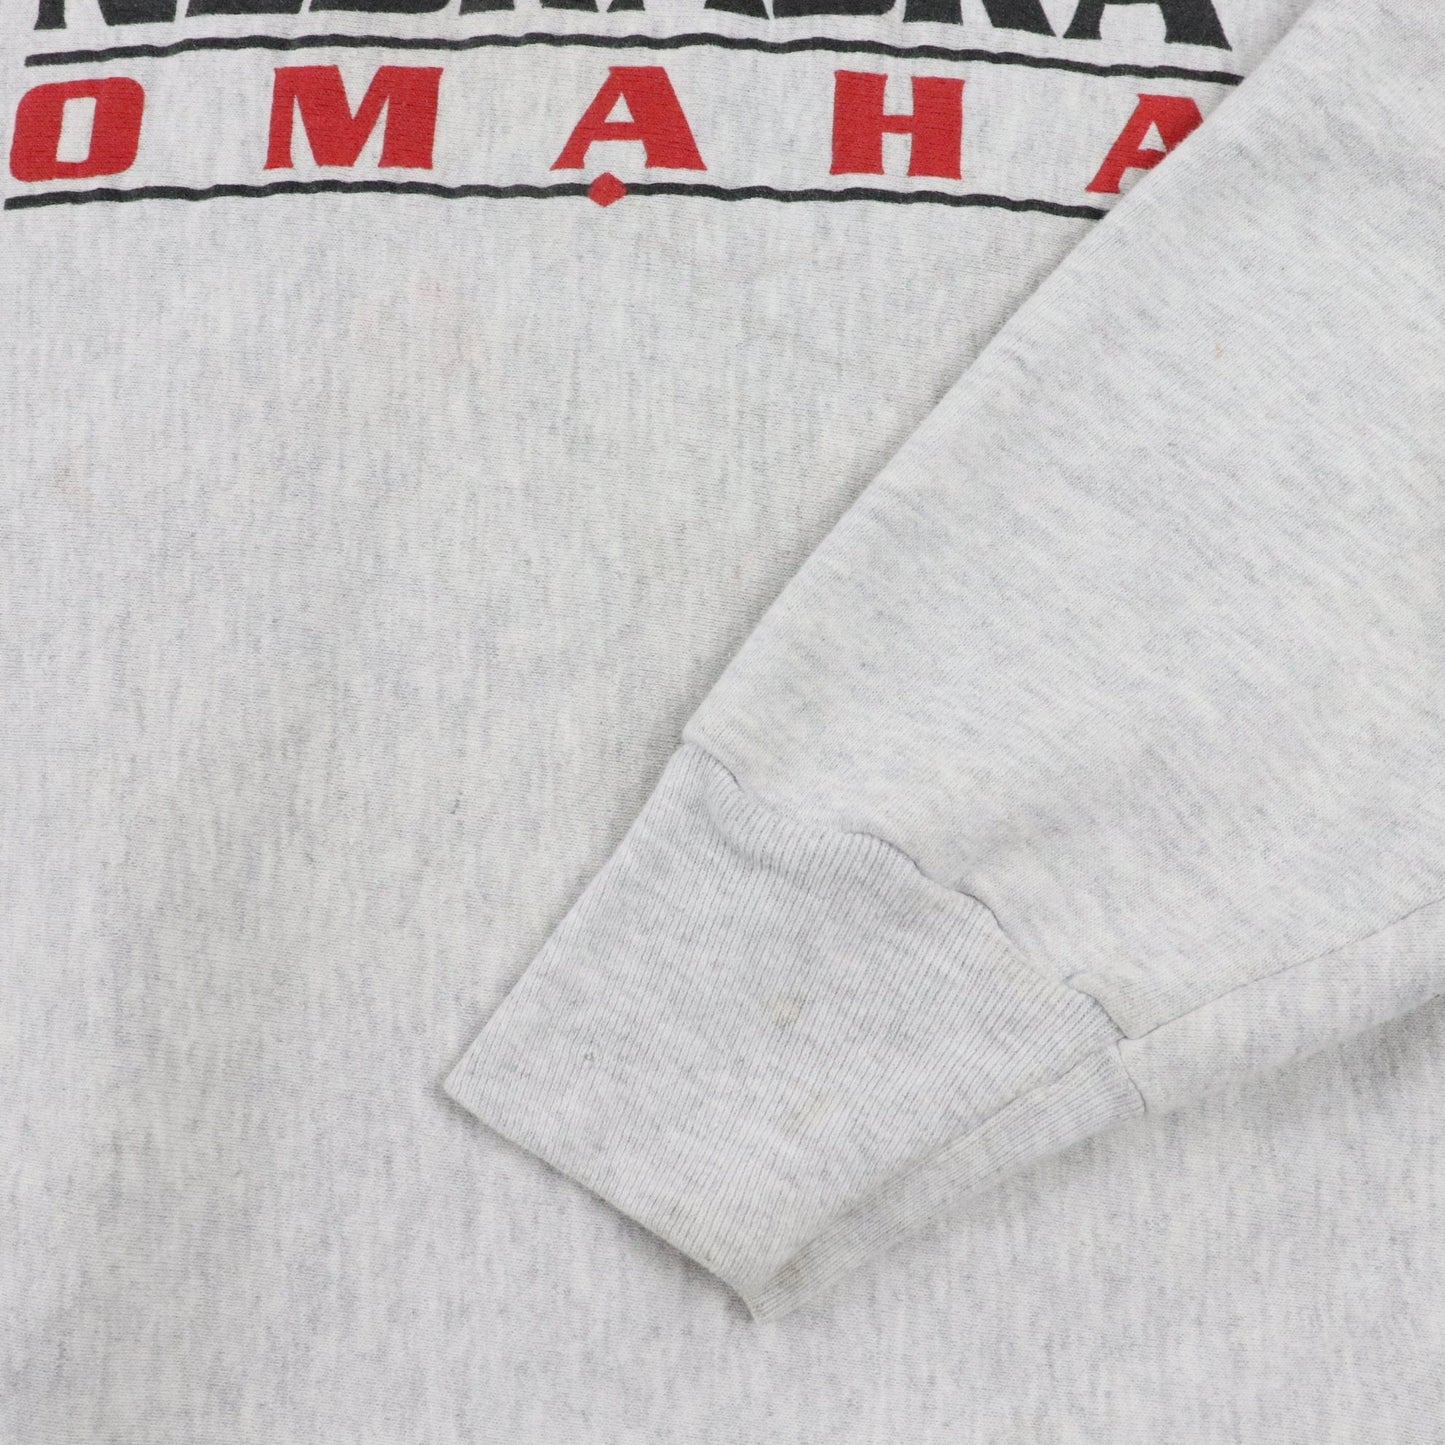 Collegiate Sweatshirts & Hoodies Vintage University Of Nebraska Omaha Sweatshirt Fits Men's Large Grey Collegiate Sweater